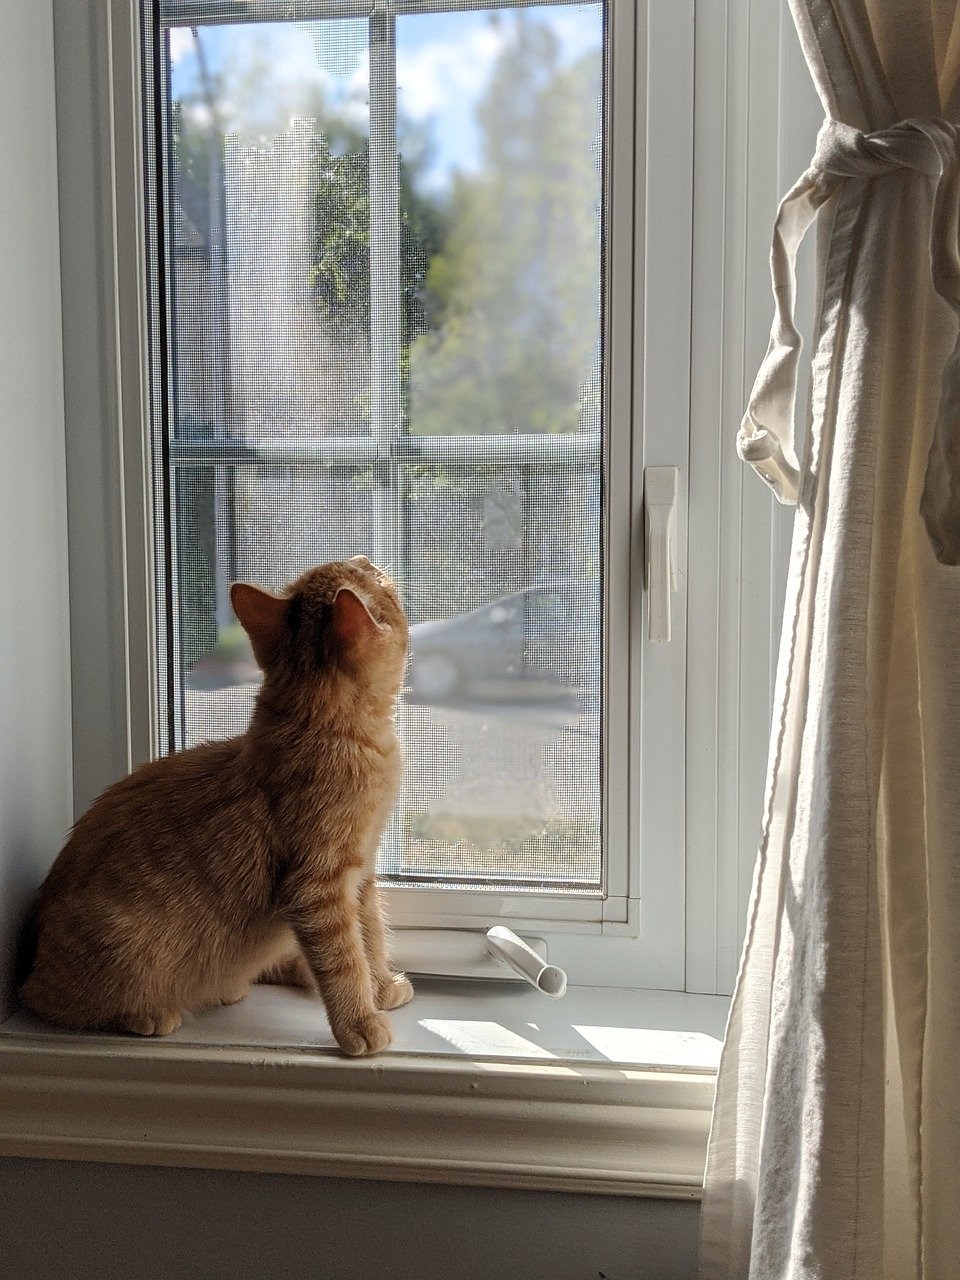 Пэт окно. Кот на окне. Кот ждет у окна. Жалюзи кошка. Кот у окна Lori цвета.